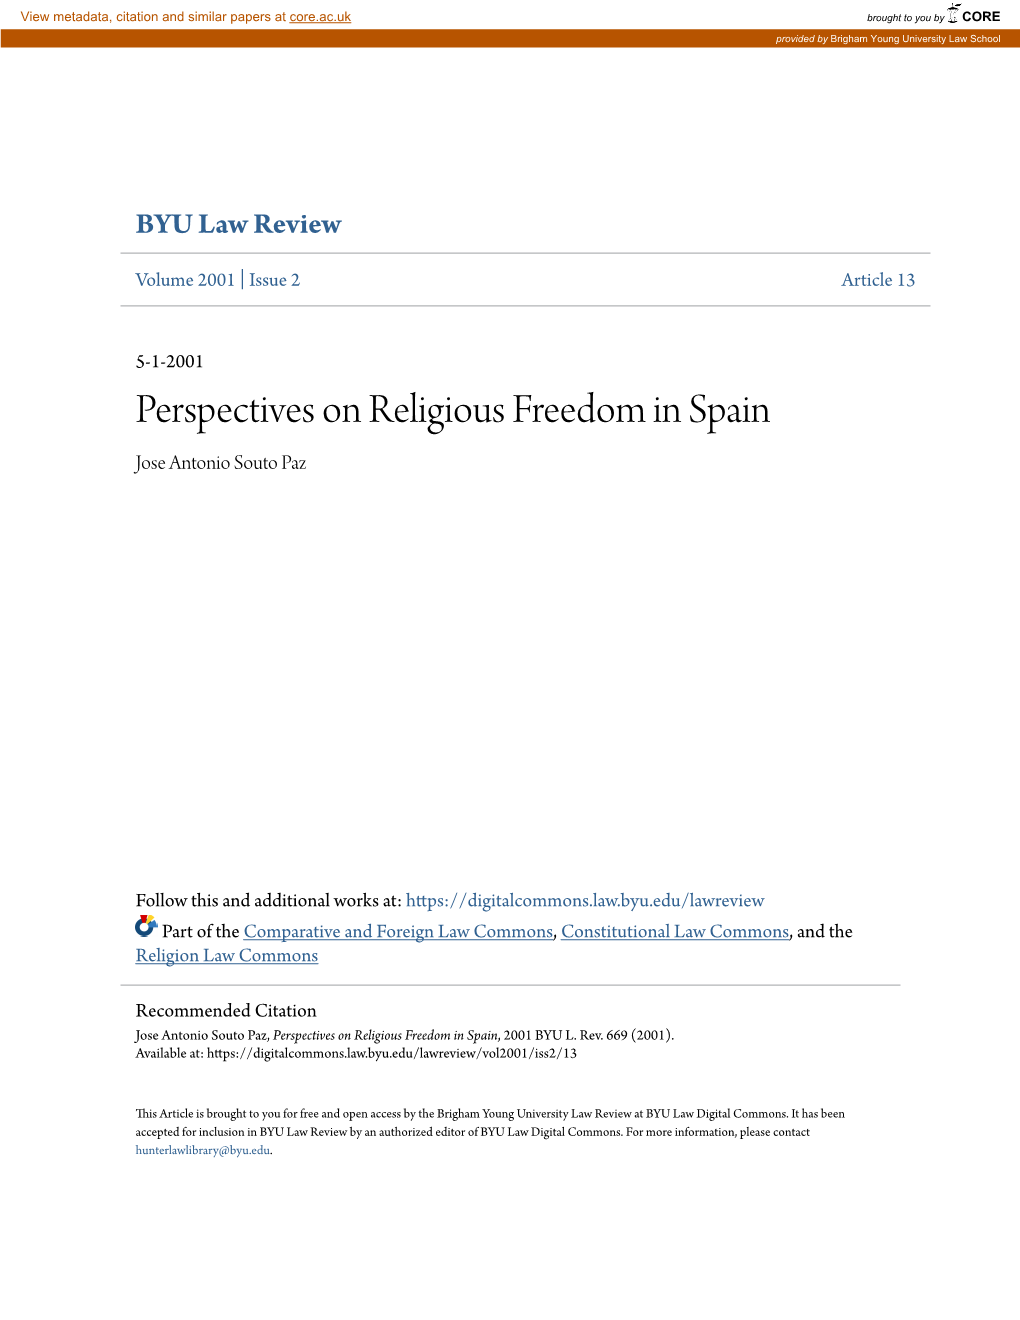 Perspectives on Religious Freedom in Spain Jose Antonio Souto Paz